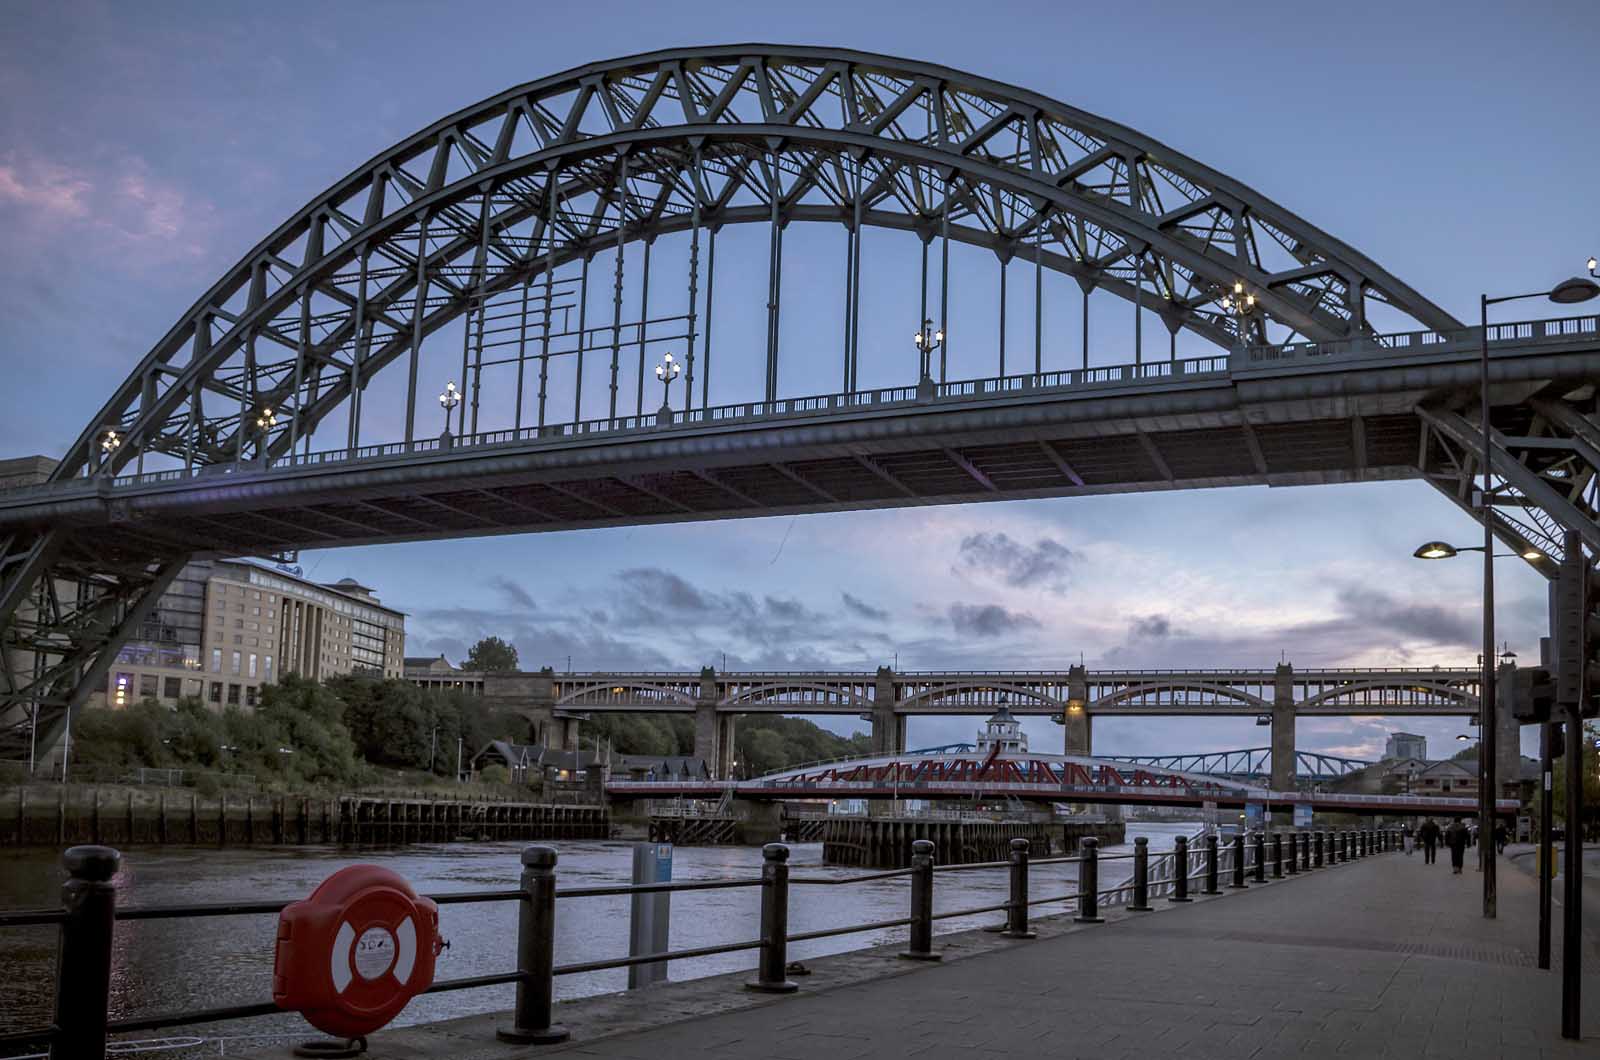 City of Newcastle upon Tyne